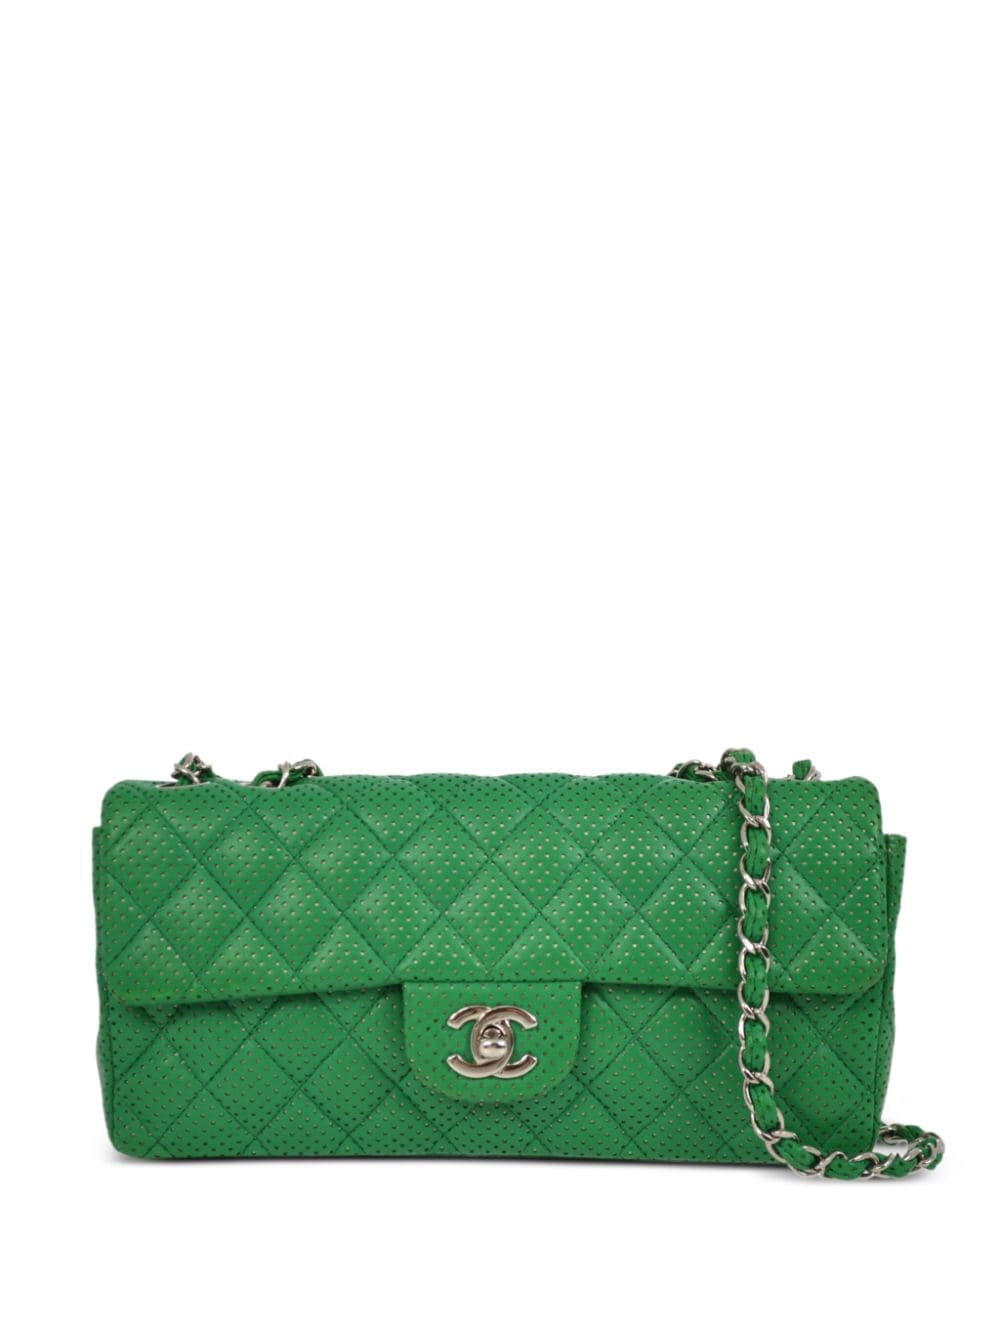 Pre-owned Chanel 2007 East West Shoulder Bag In Green